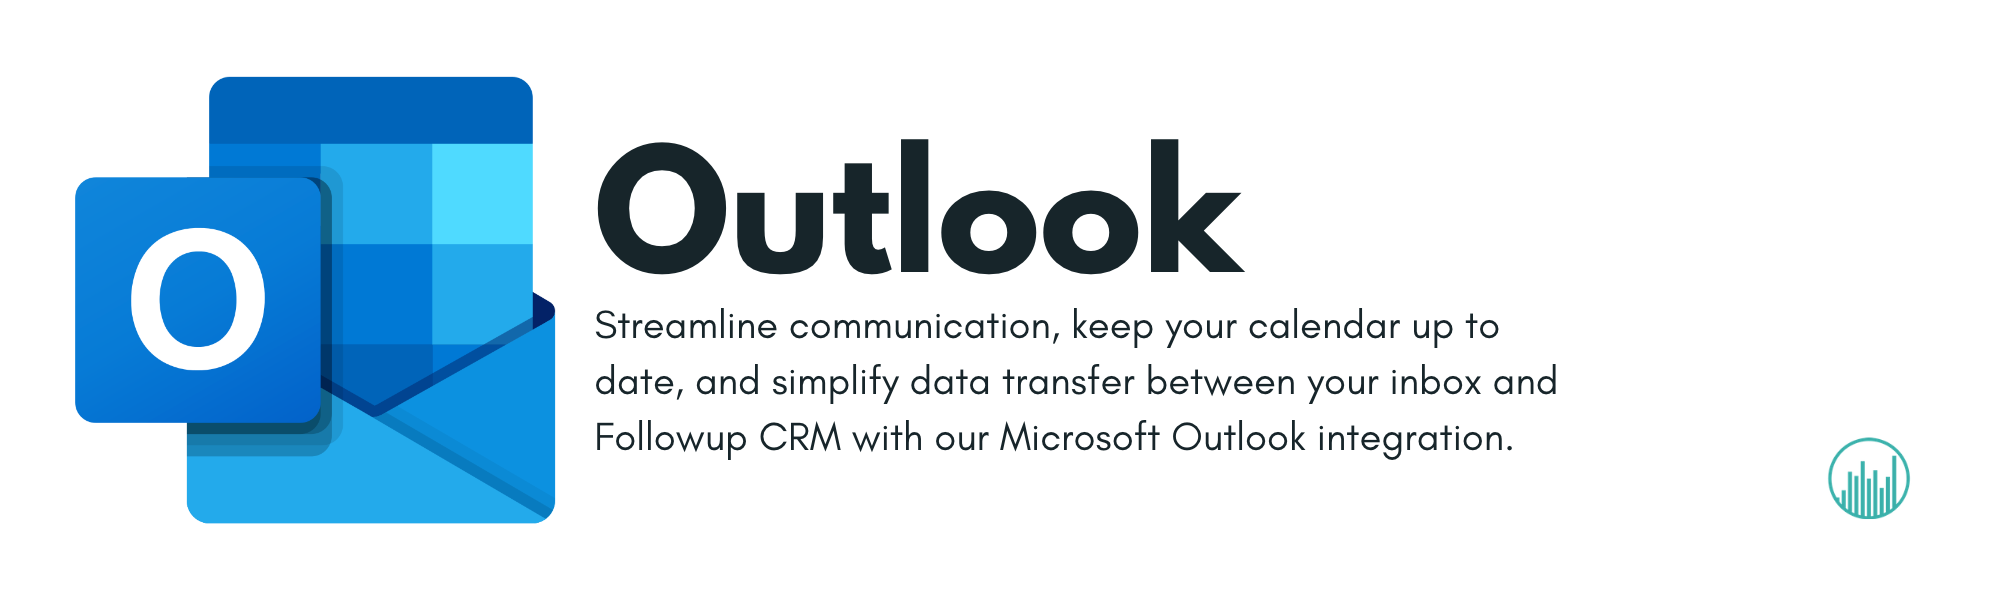 Microsoft outlook logo plus a large, black text saying 